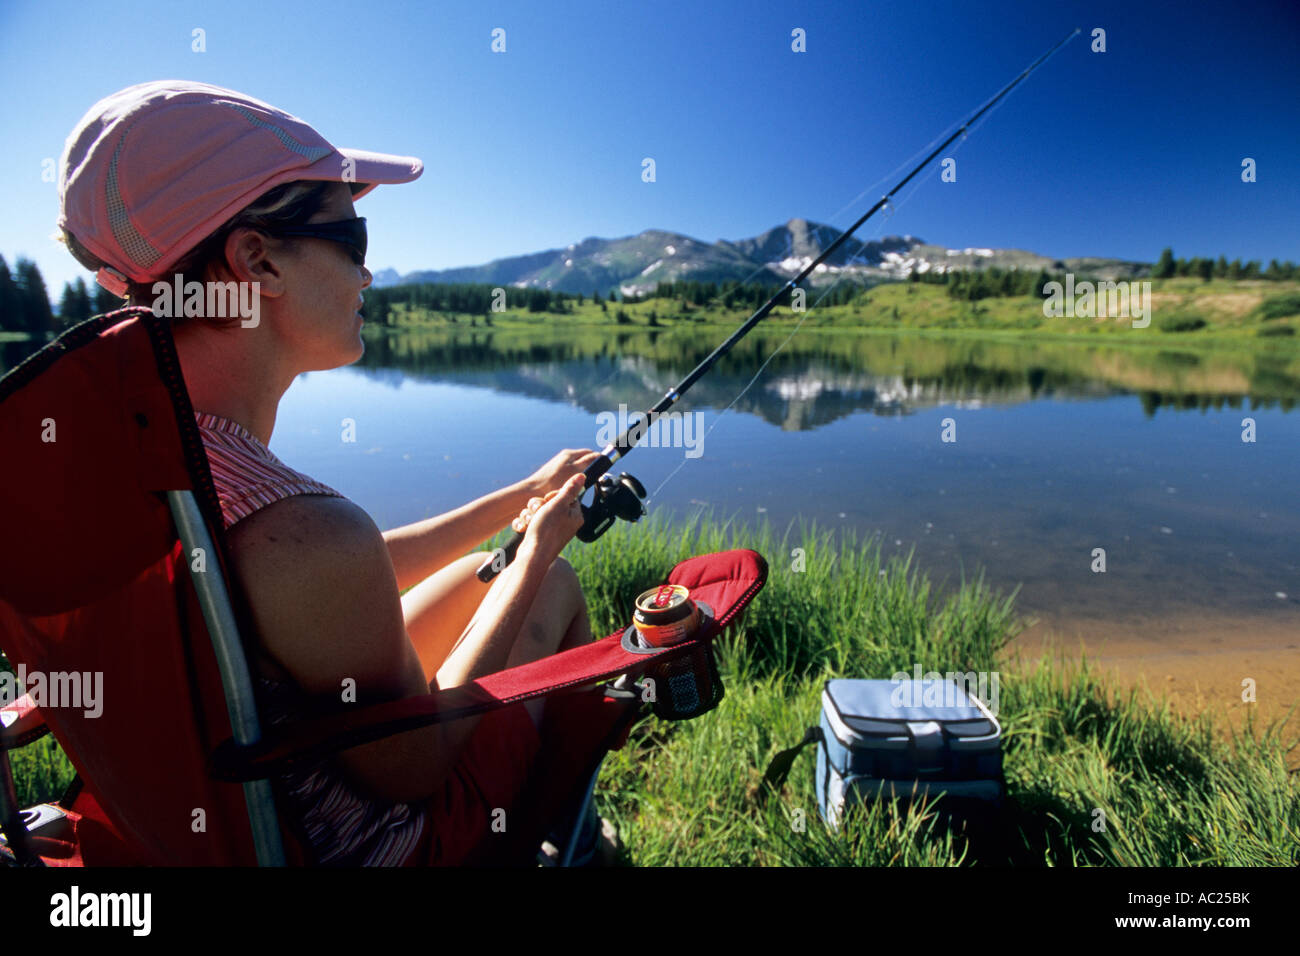 https://c8.alamy.com/comp/AC25BK/woman-fishing-by-lake-AC25BK.jpg